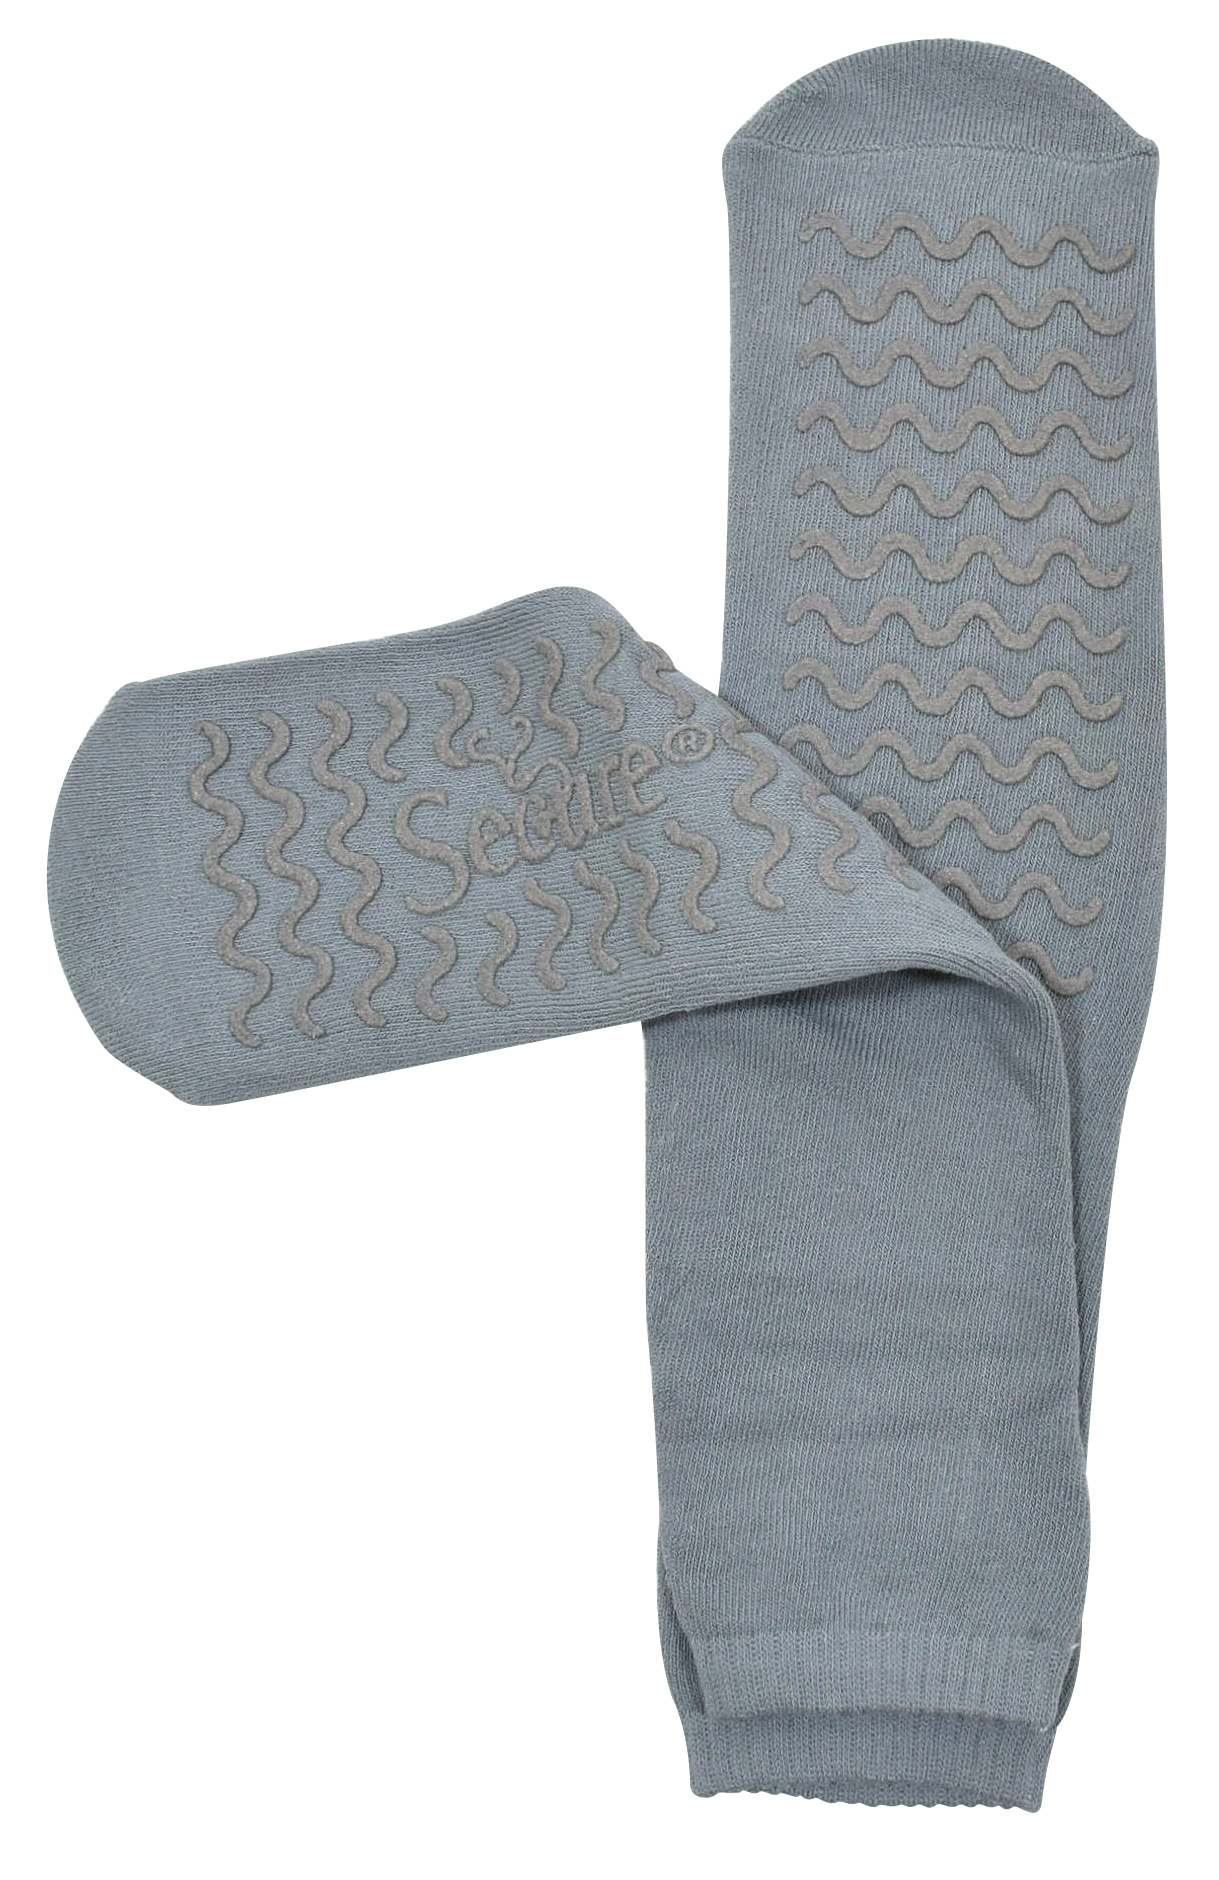 Medline Double Tread Hospital Socks